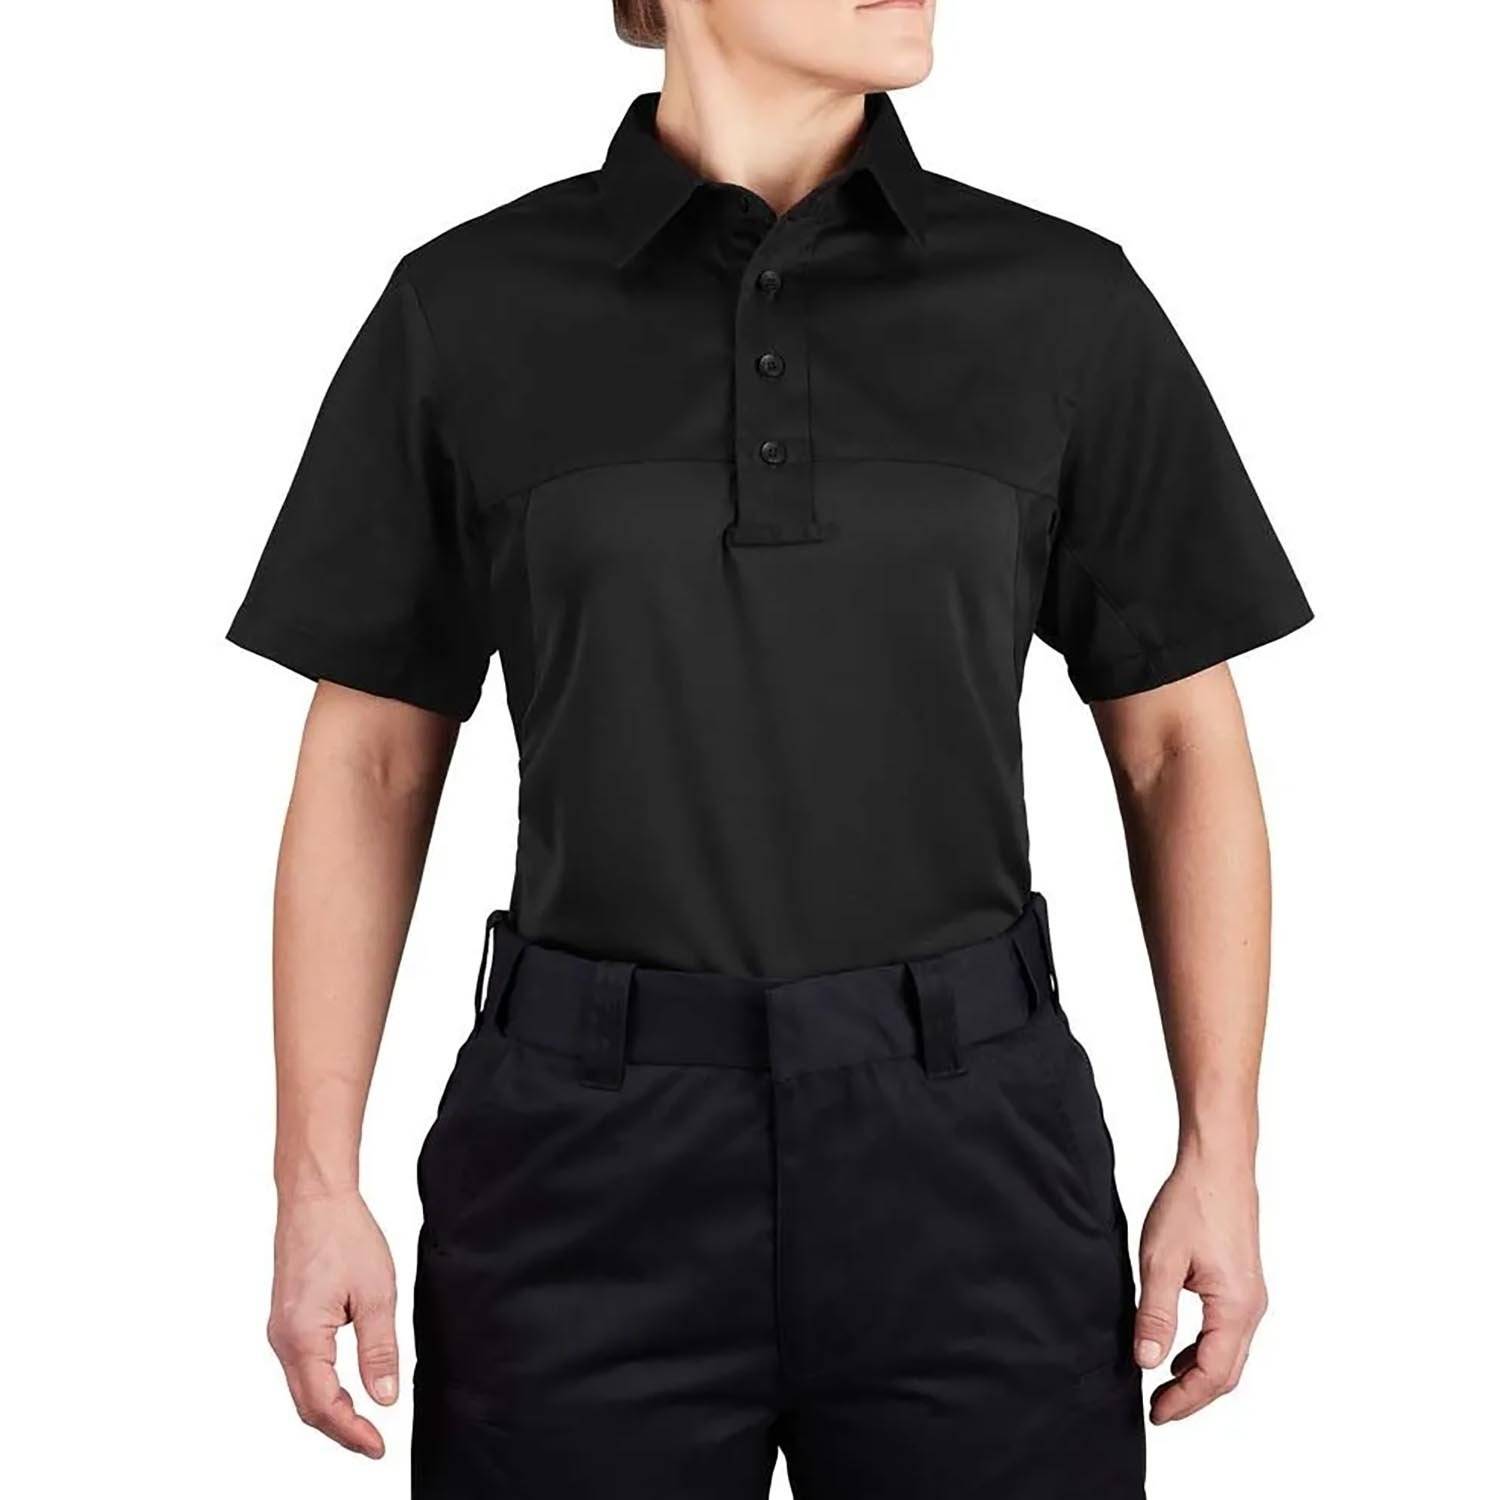 Propper Women's Duty Uniform Armor Short Sleeve Shirt